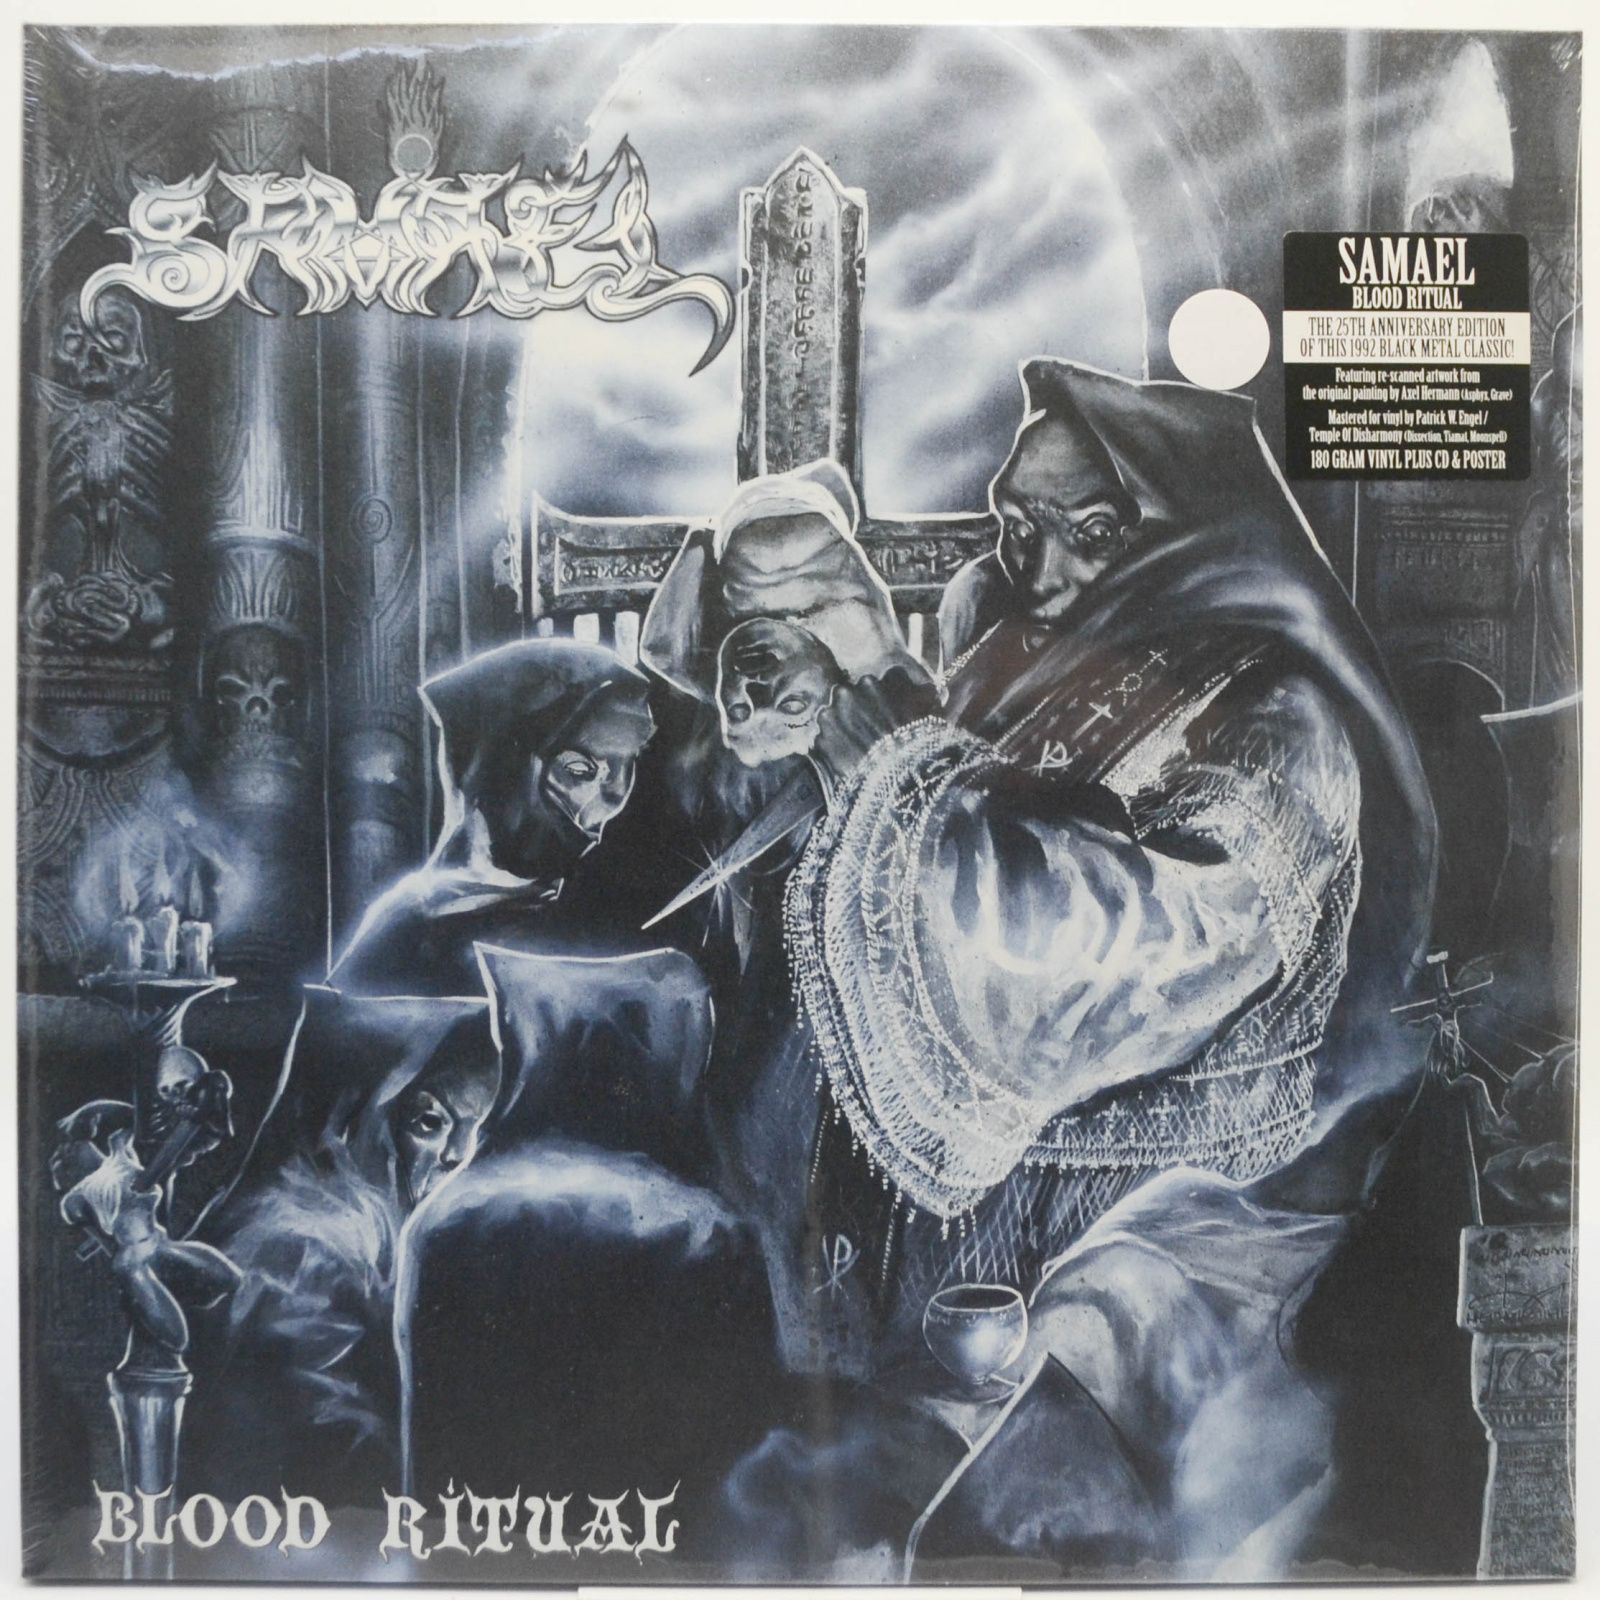 Samael — Blood Ritual, 1992